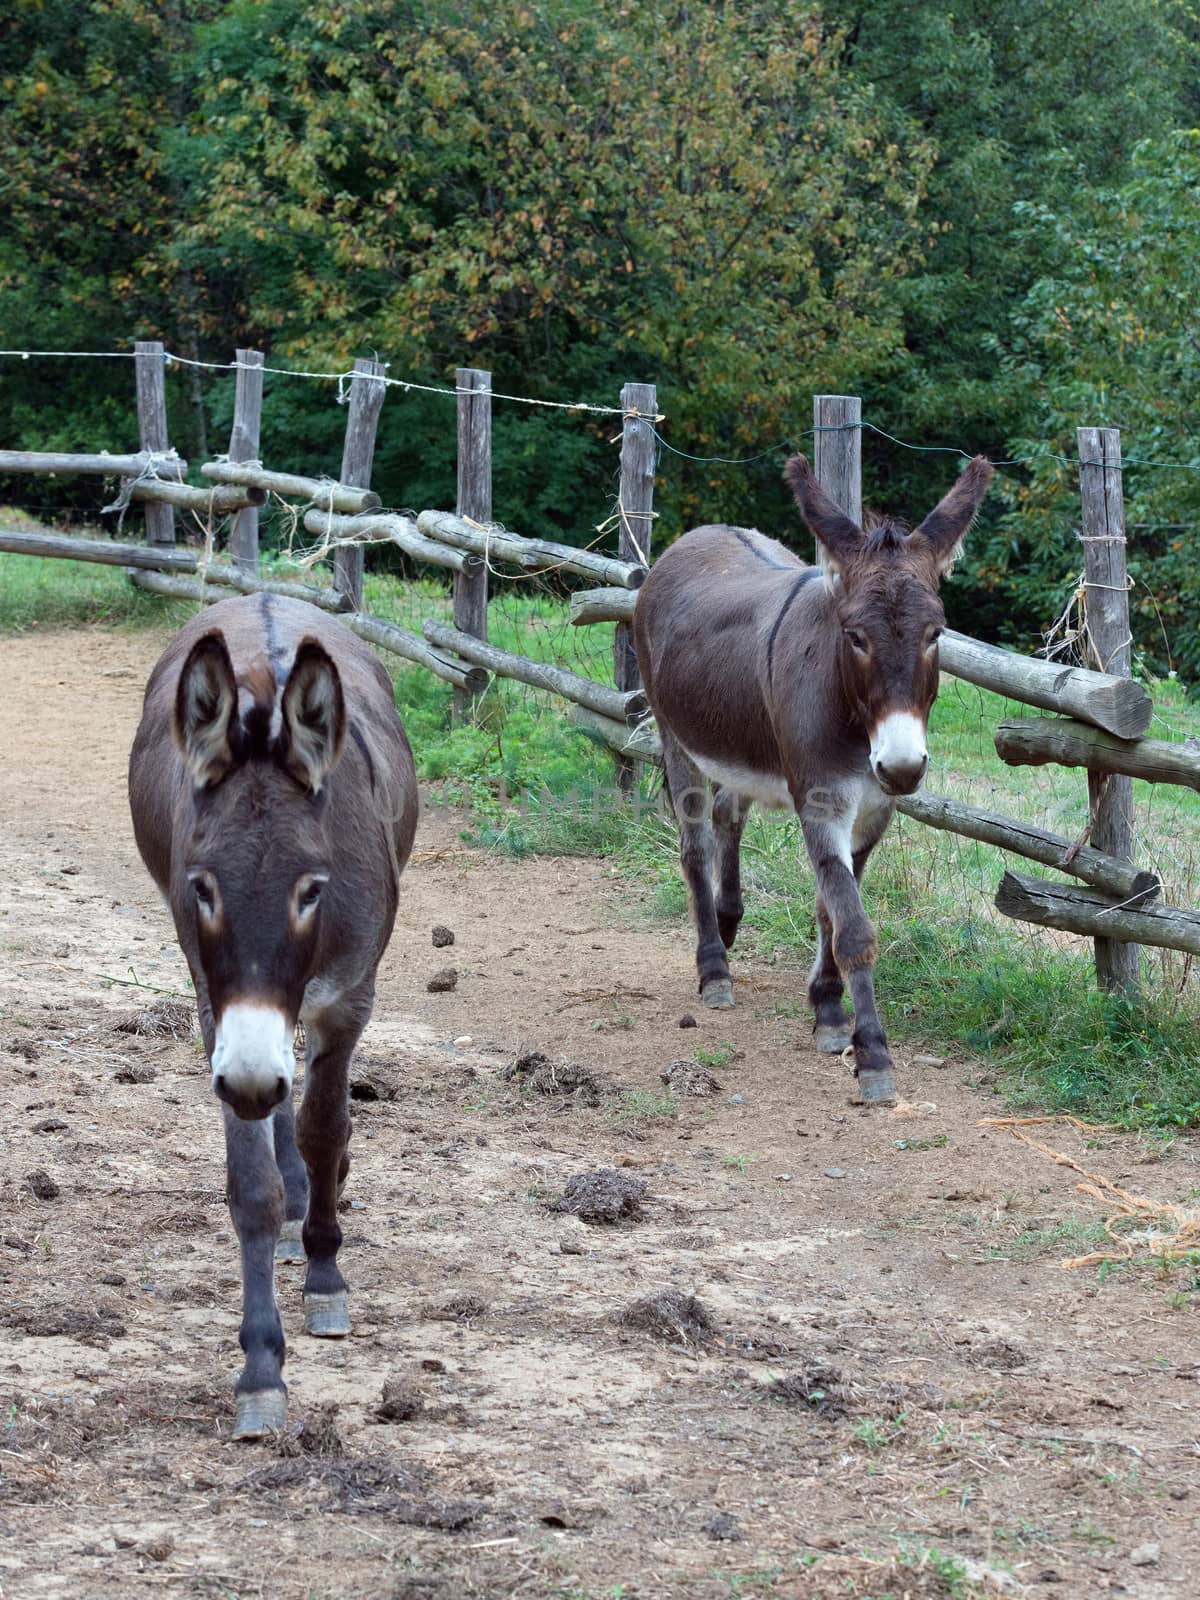 pair of donkeys observe the photographer